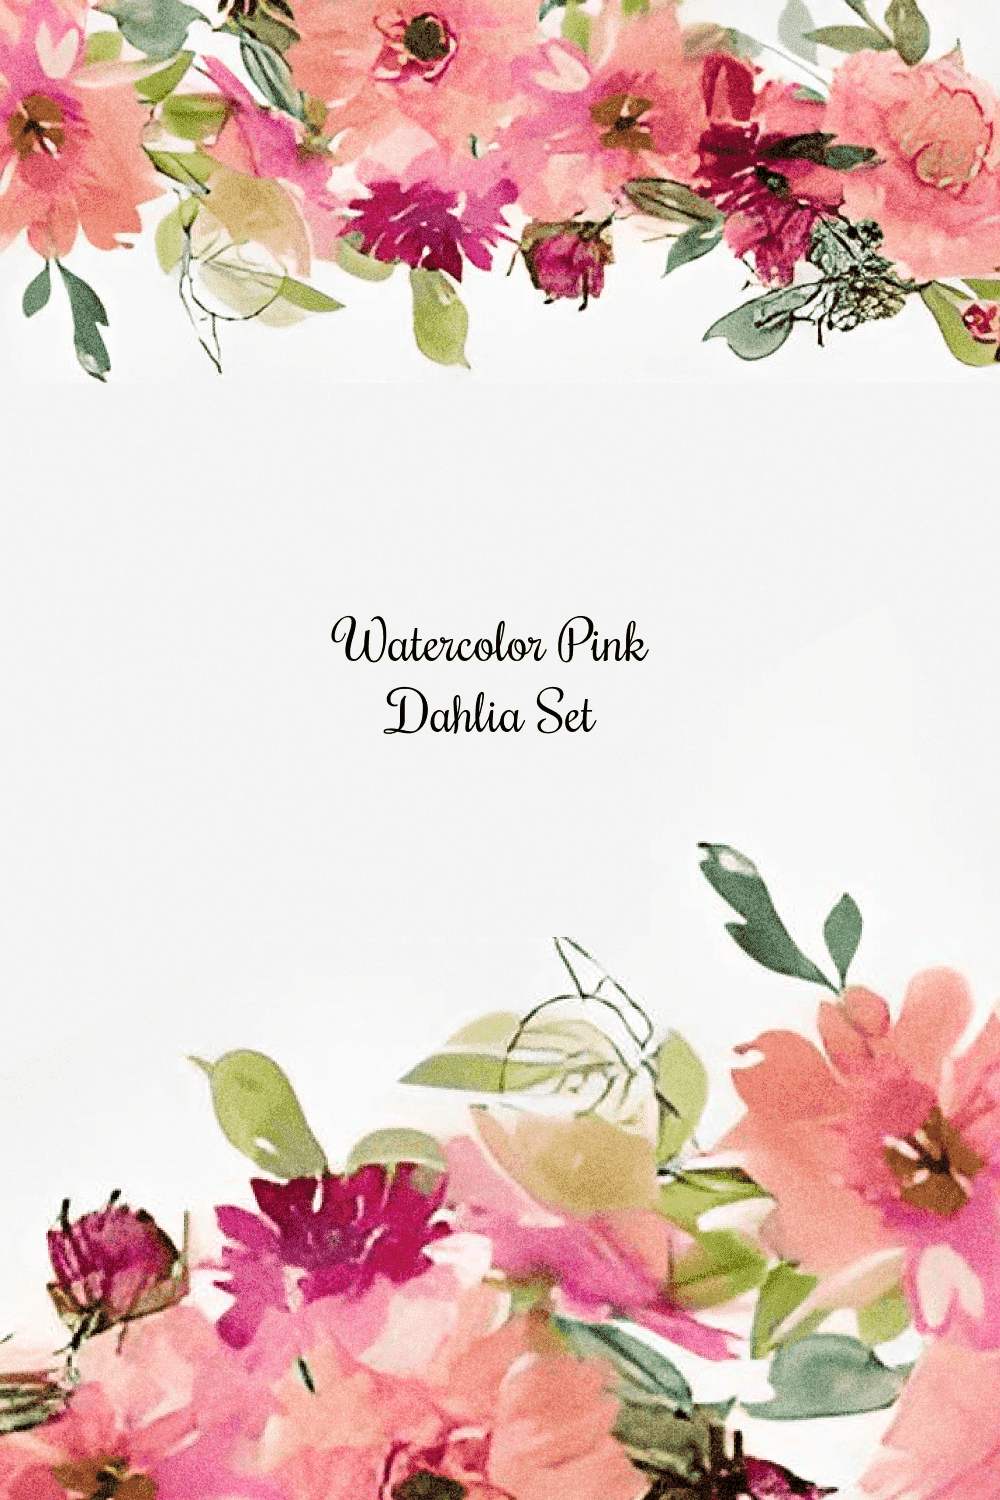 Watercolor Pink Dahlia - Pinterest Image Preview.